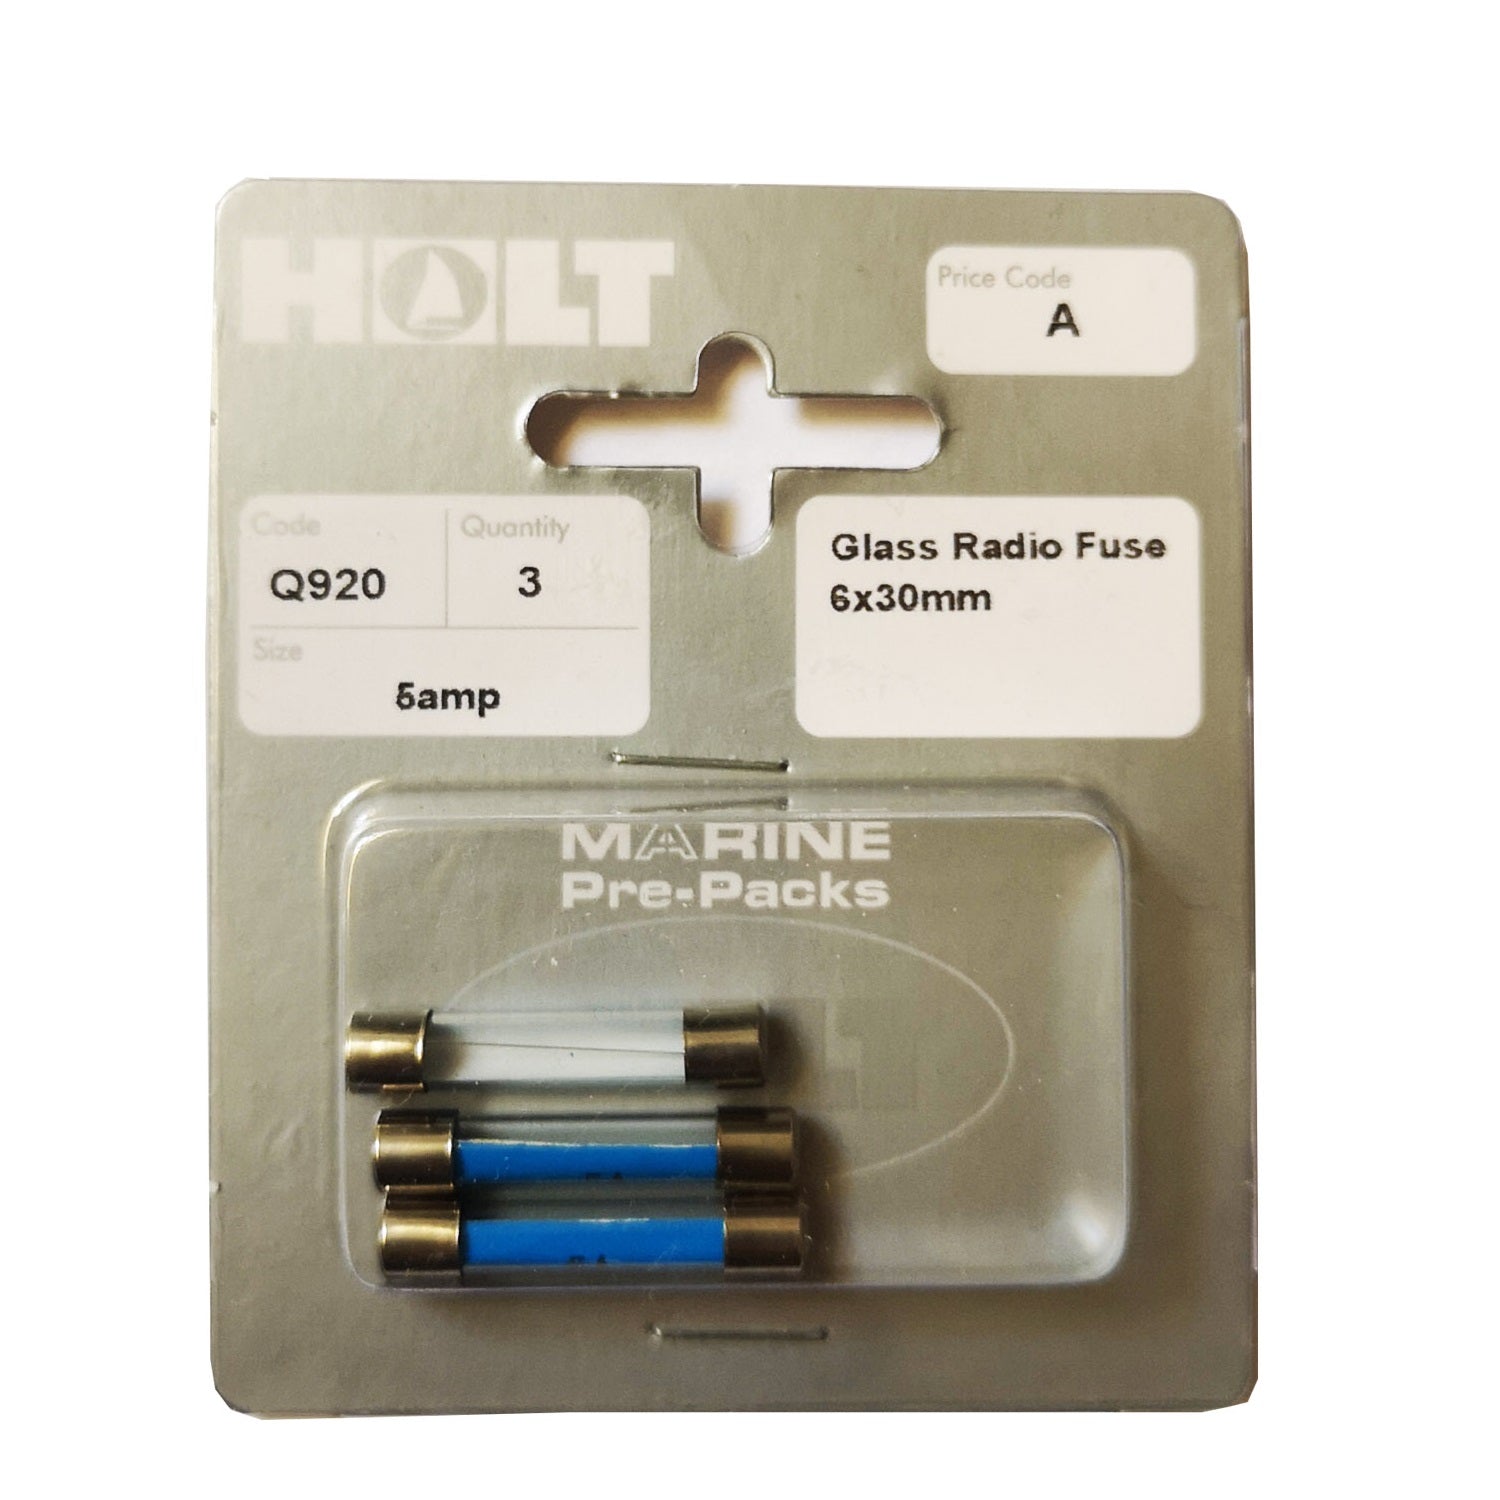 Holt Marine Q920 Glass Radio Fuse Pkt3 - 5amp - Premium Fuses from Holt Marine - Just $2.25! Shop now at W Hurst & Son (IW) Ltd